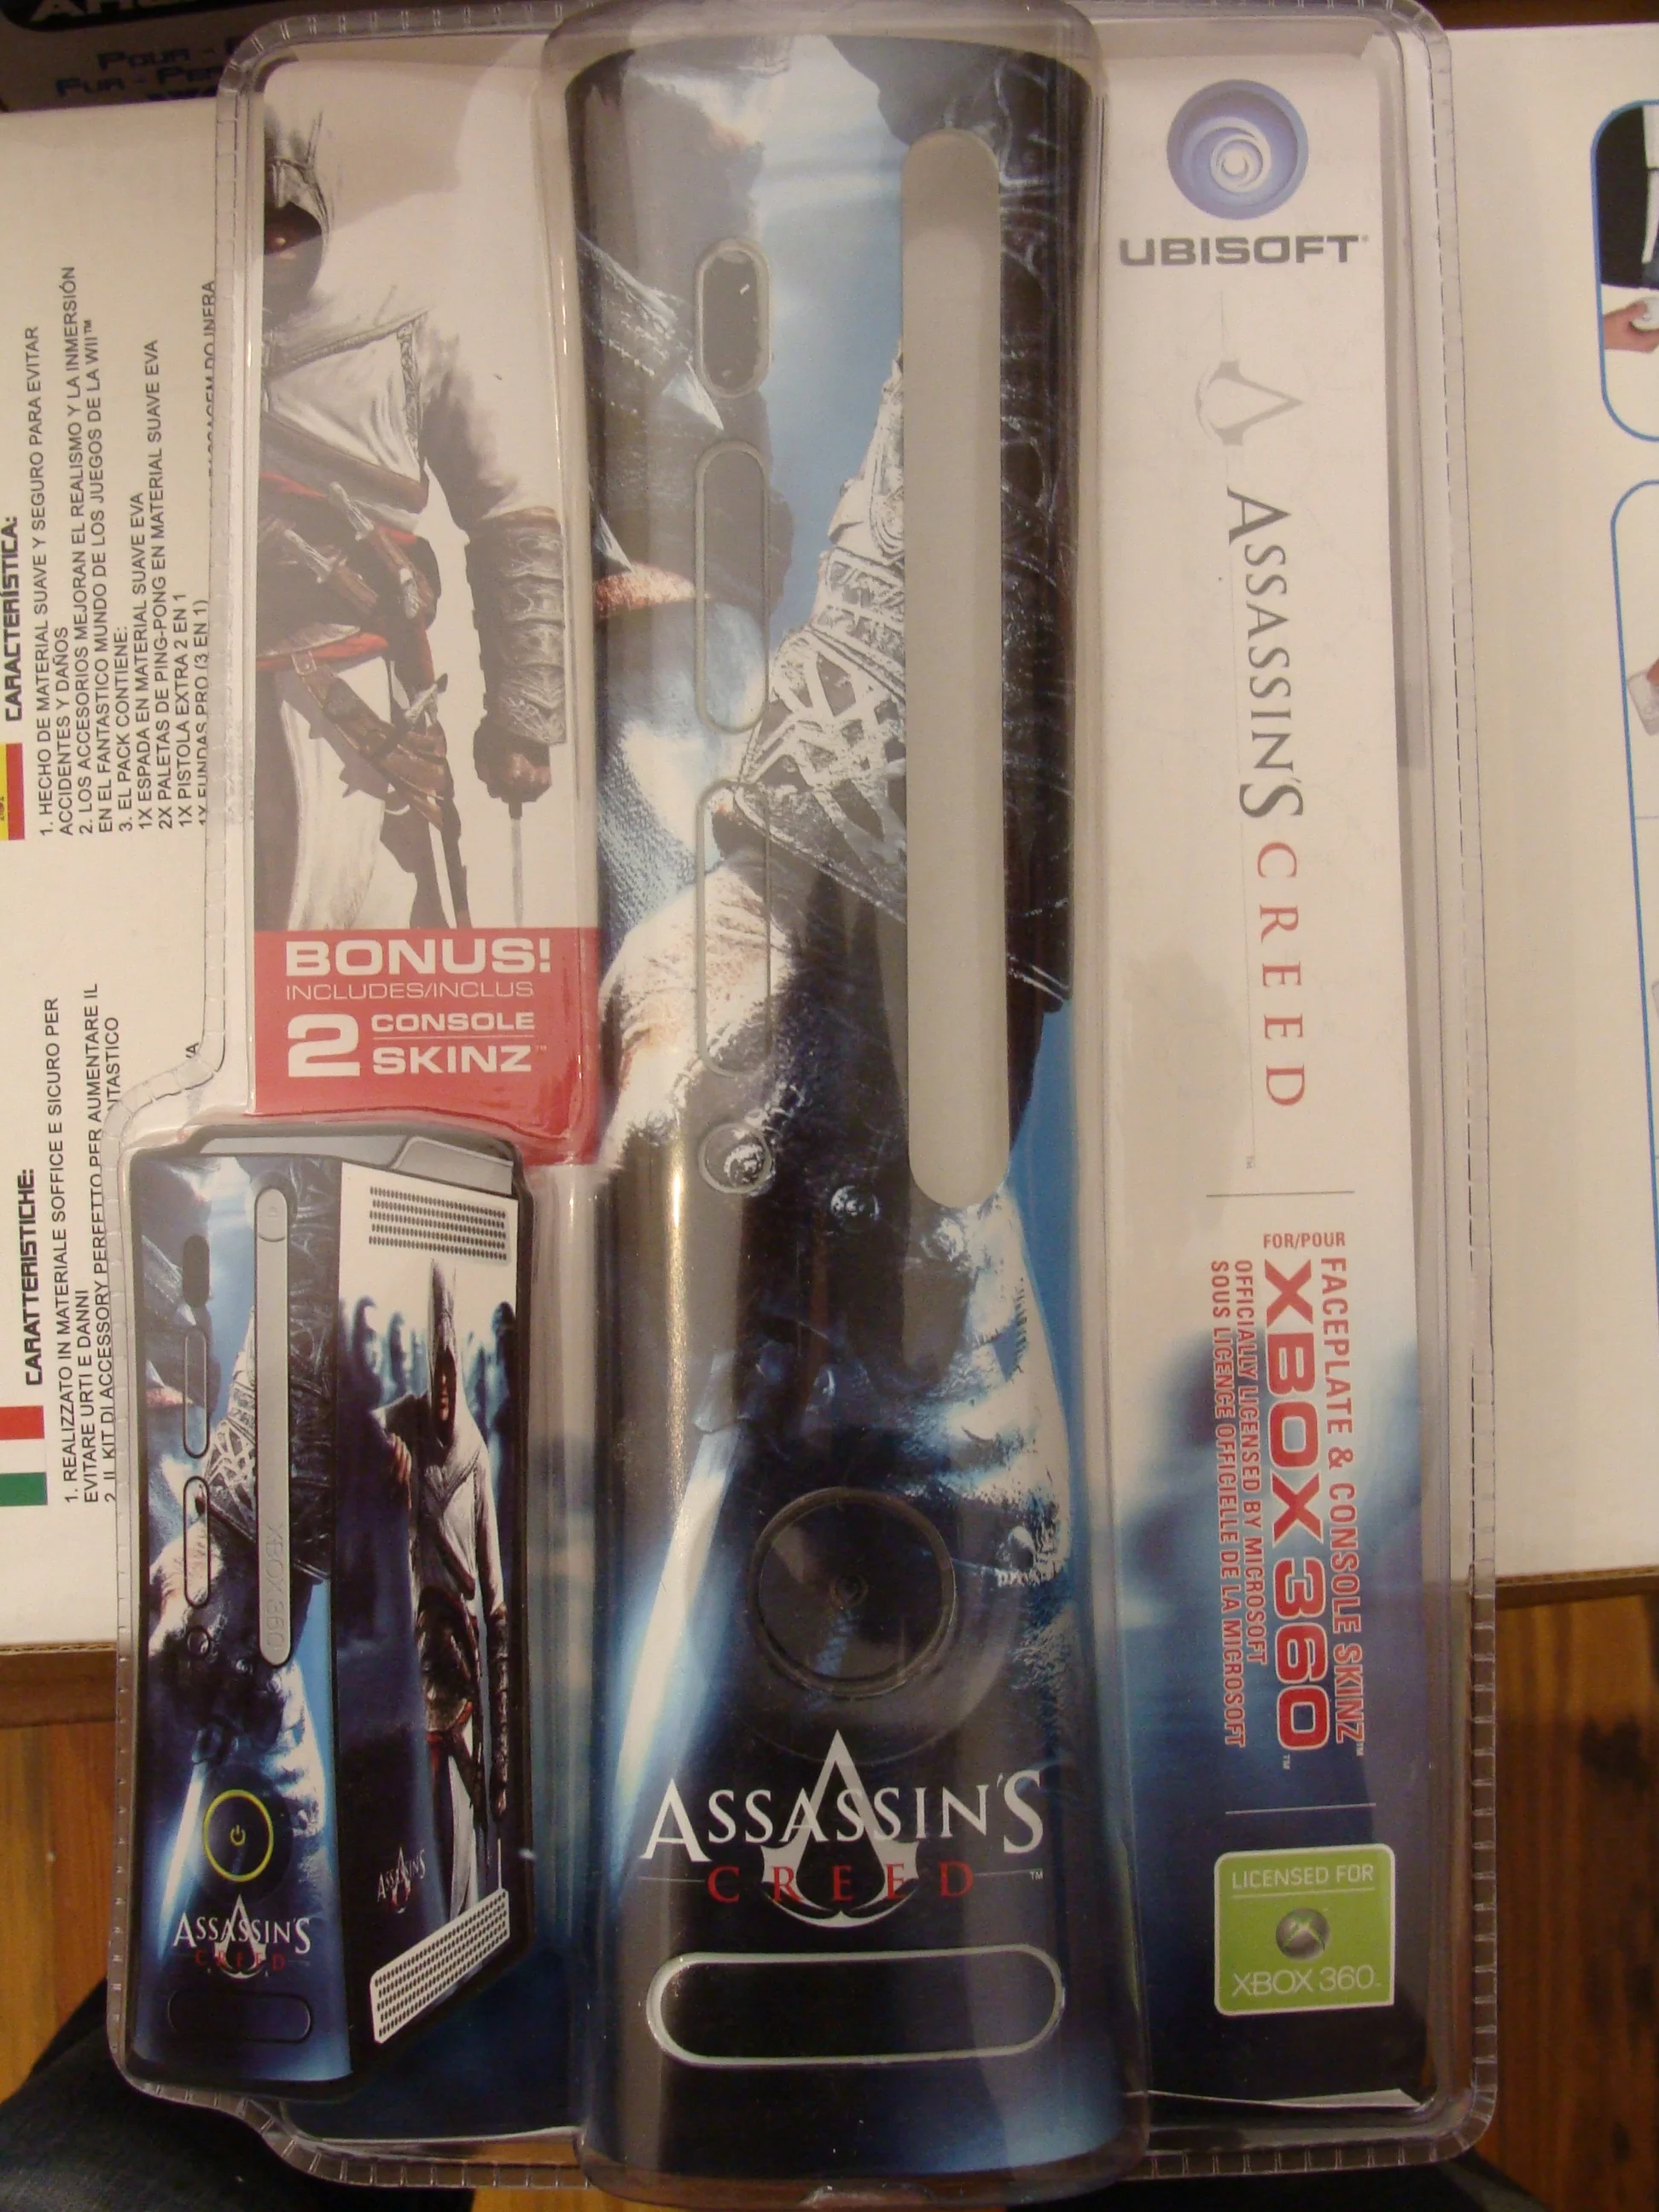  Microsoft Xbox 360 Assassin's Creed Faceplate